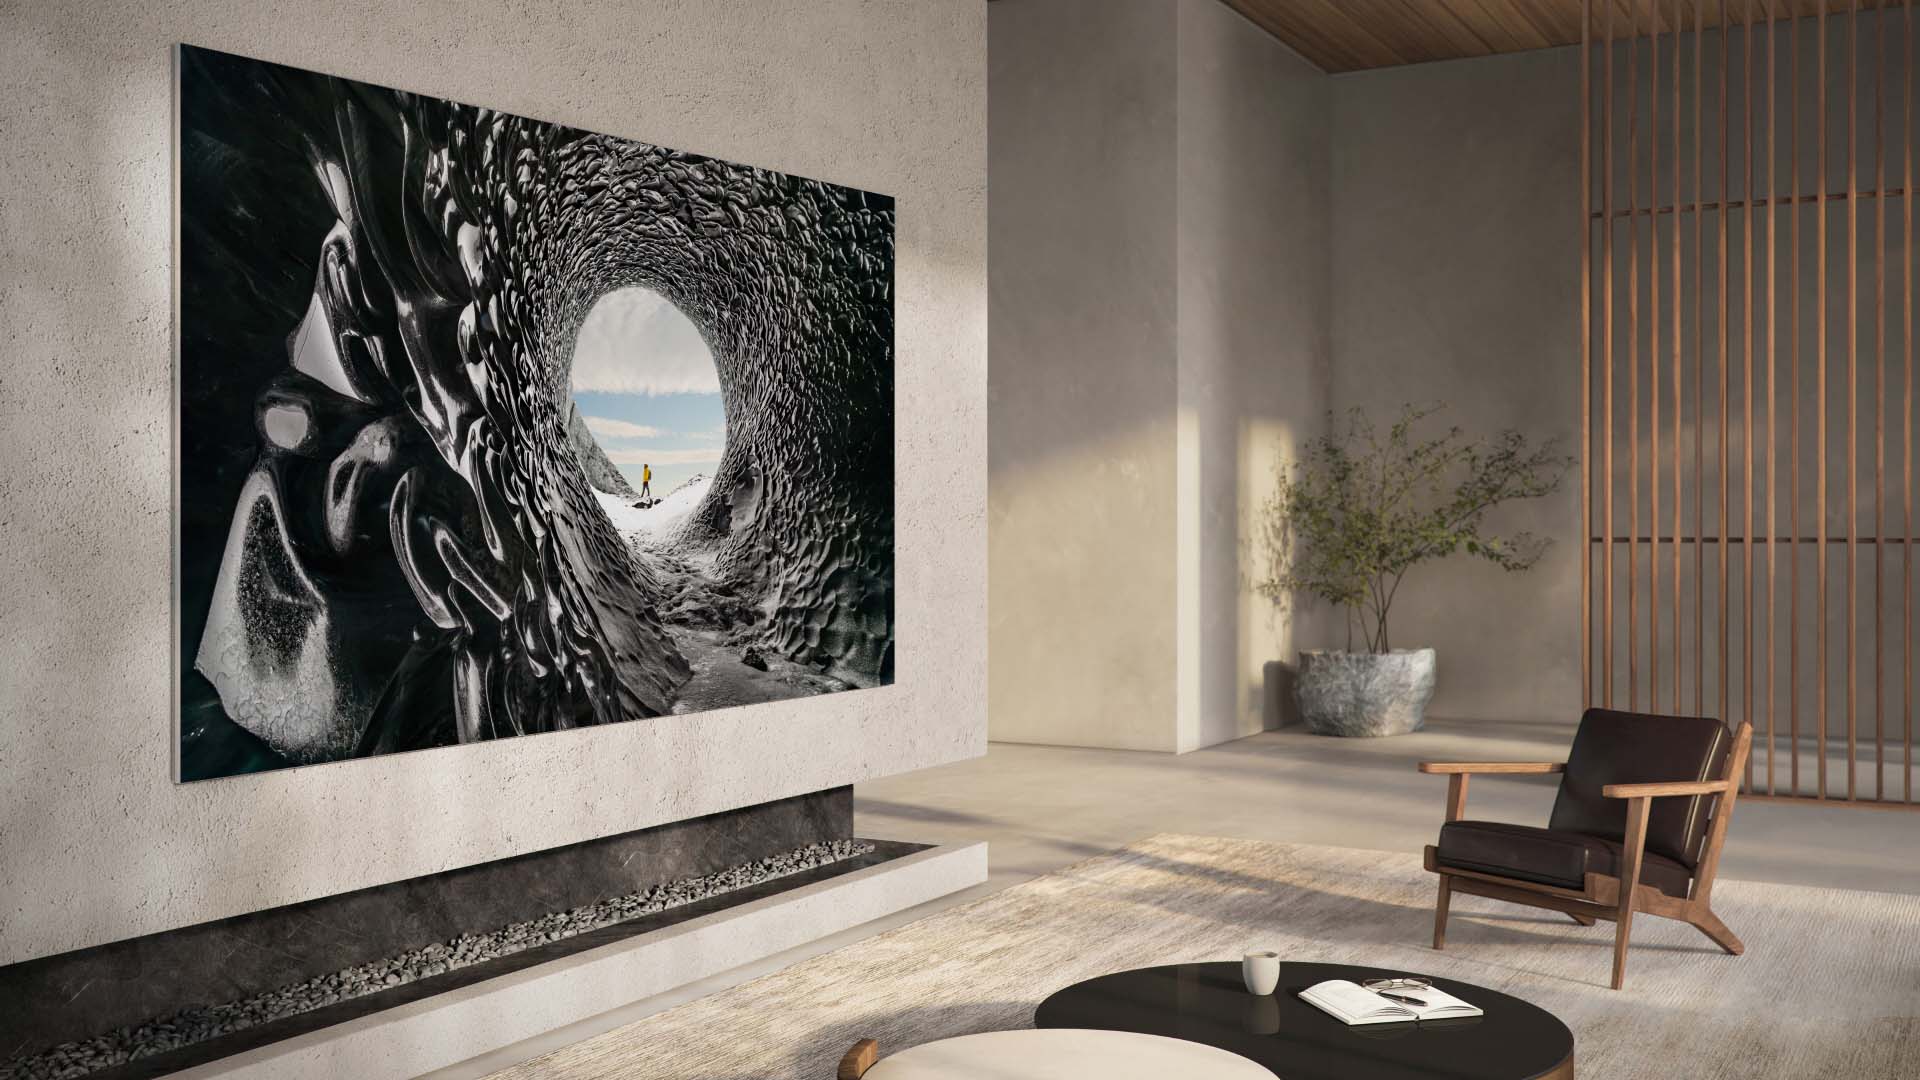 Is it artwork or a television? Samsung's 2022 TV range. Image: Samsung.